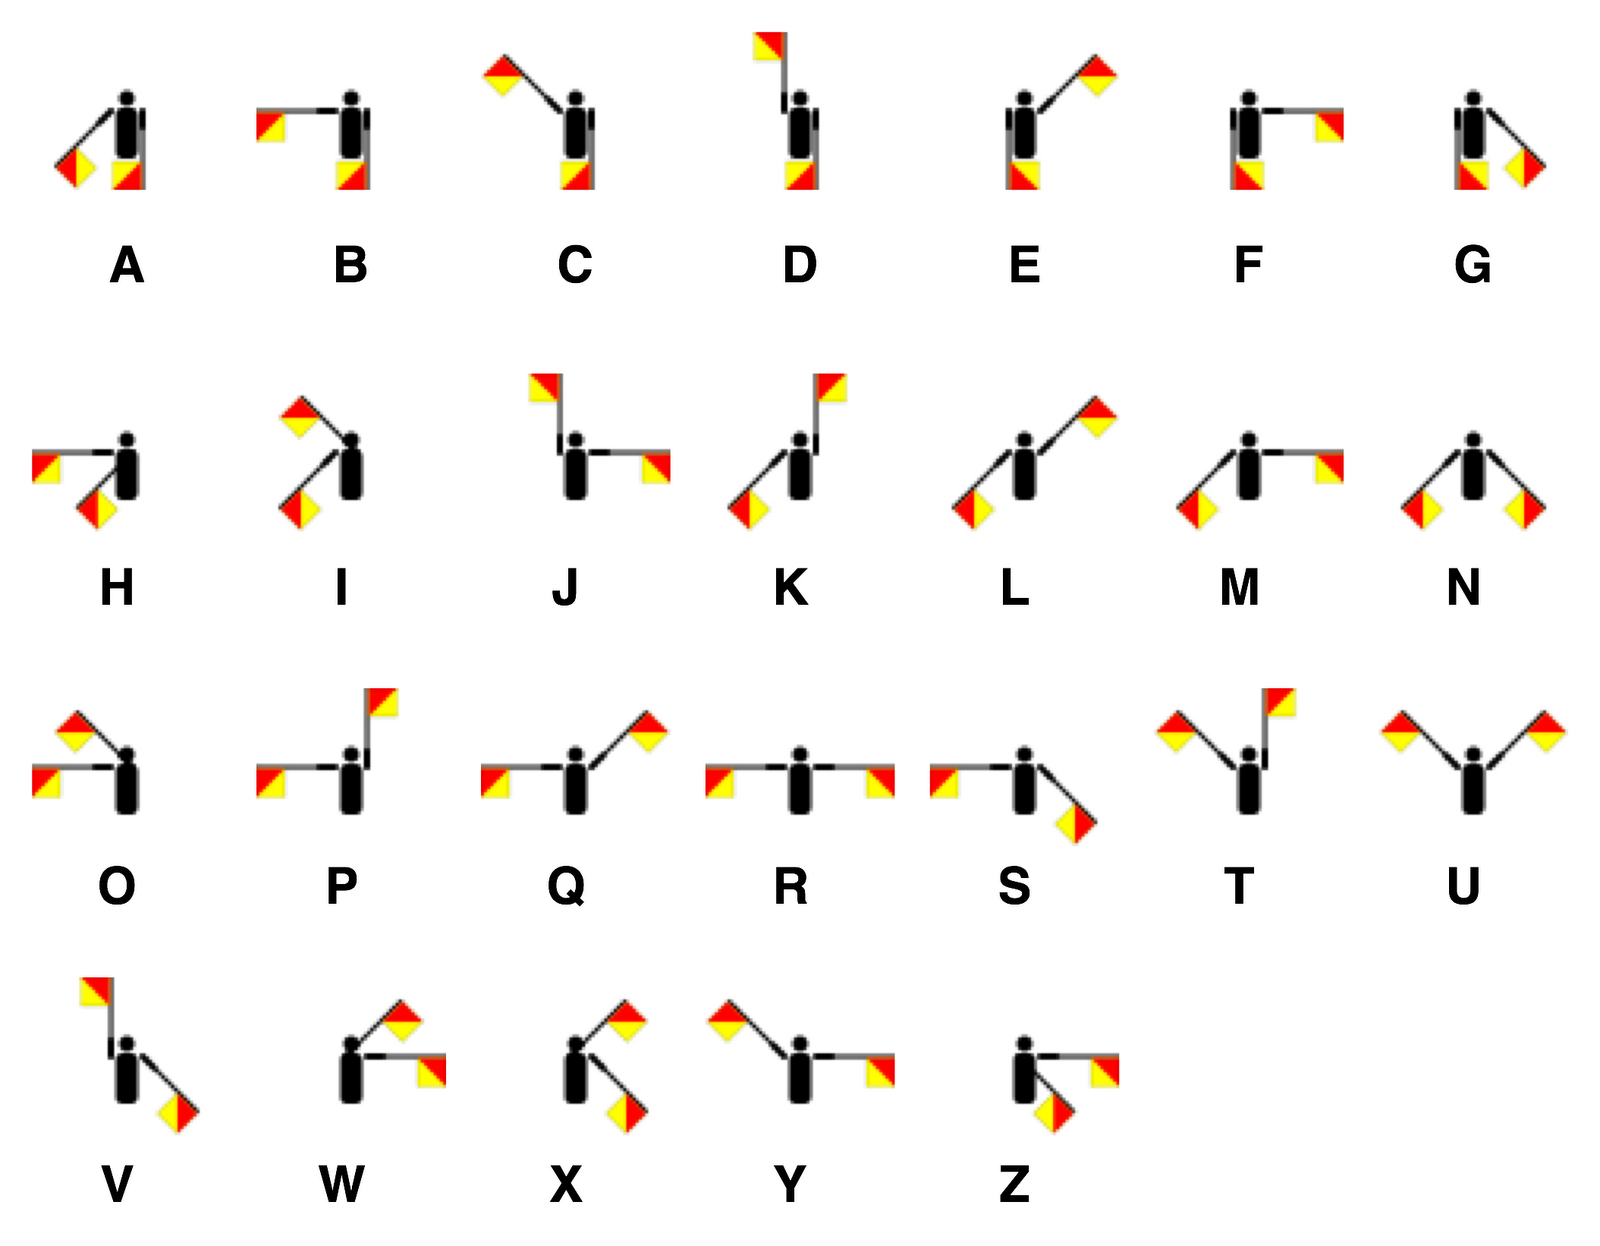 Sandi ini merupakan aplikasi dari huruf semafor Untuk posisi huruf semafor menggunakan bendera dapat dilihat pada gambar berikut ini